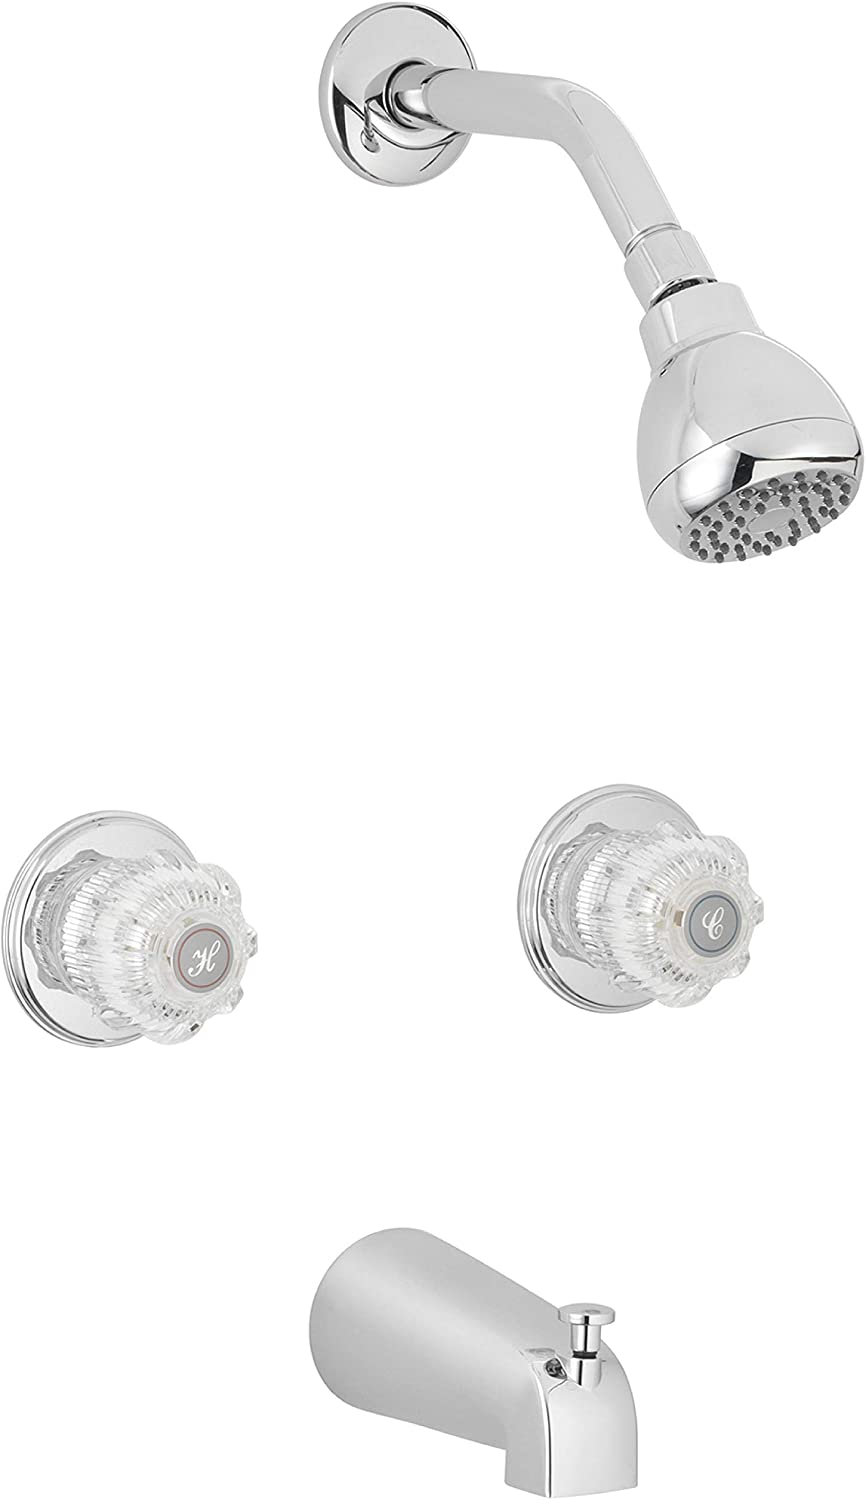 Aqua Vista 10SHO1H-CH-AV Acrylic Knobs Tub and Shower Faucet Trim Kit